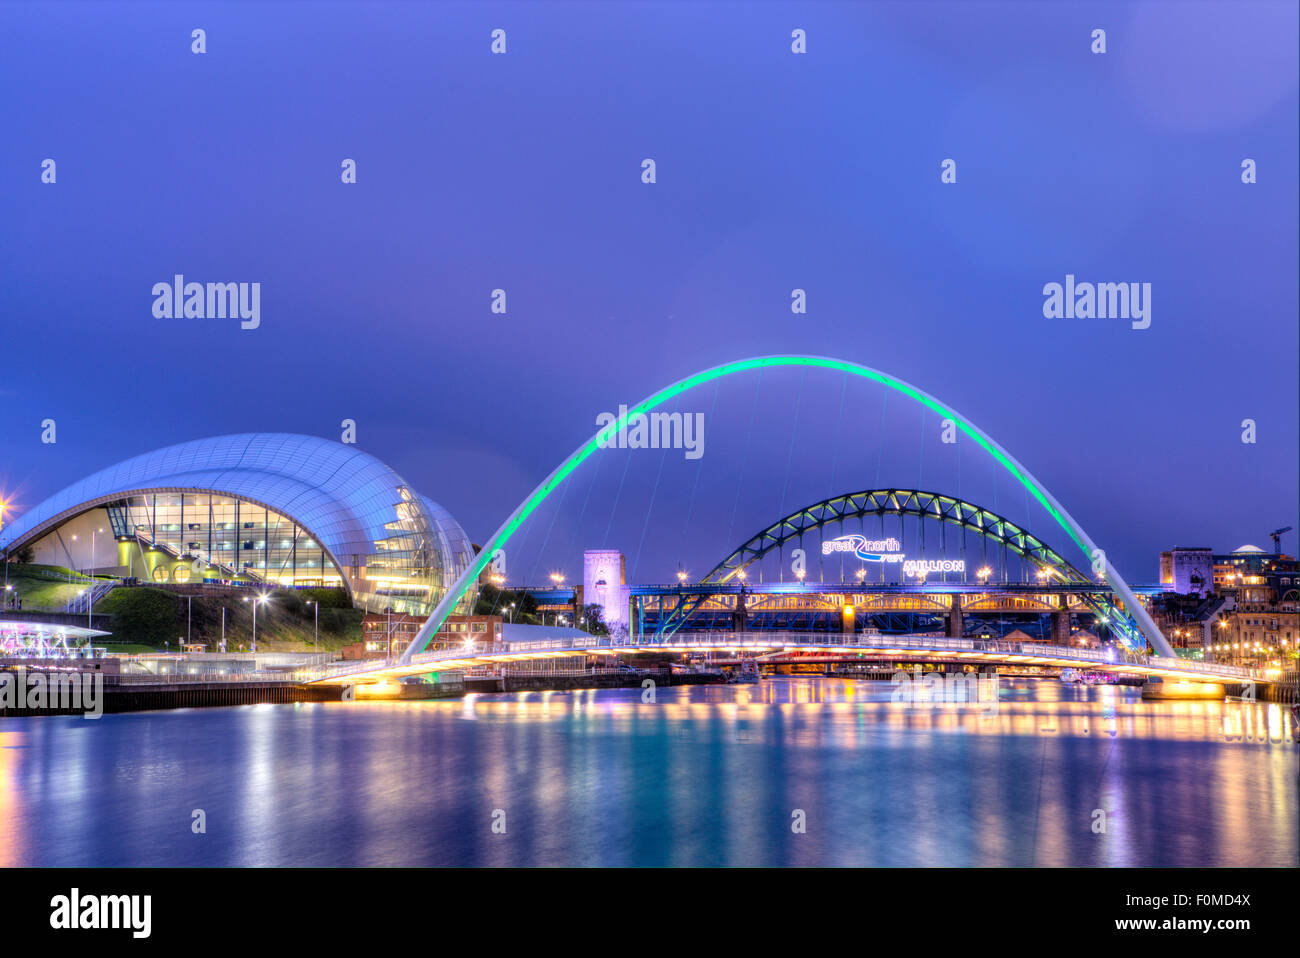 Tyne river, Gateshead/Newcastle, England, showing the Millennium bridge, the Tyne Bridge and the Sage Gateshead arts centre Stock Photo